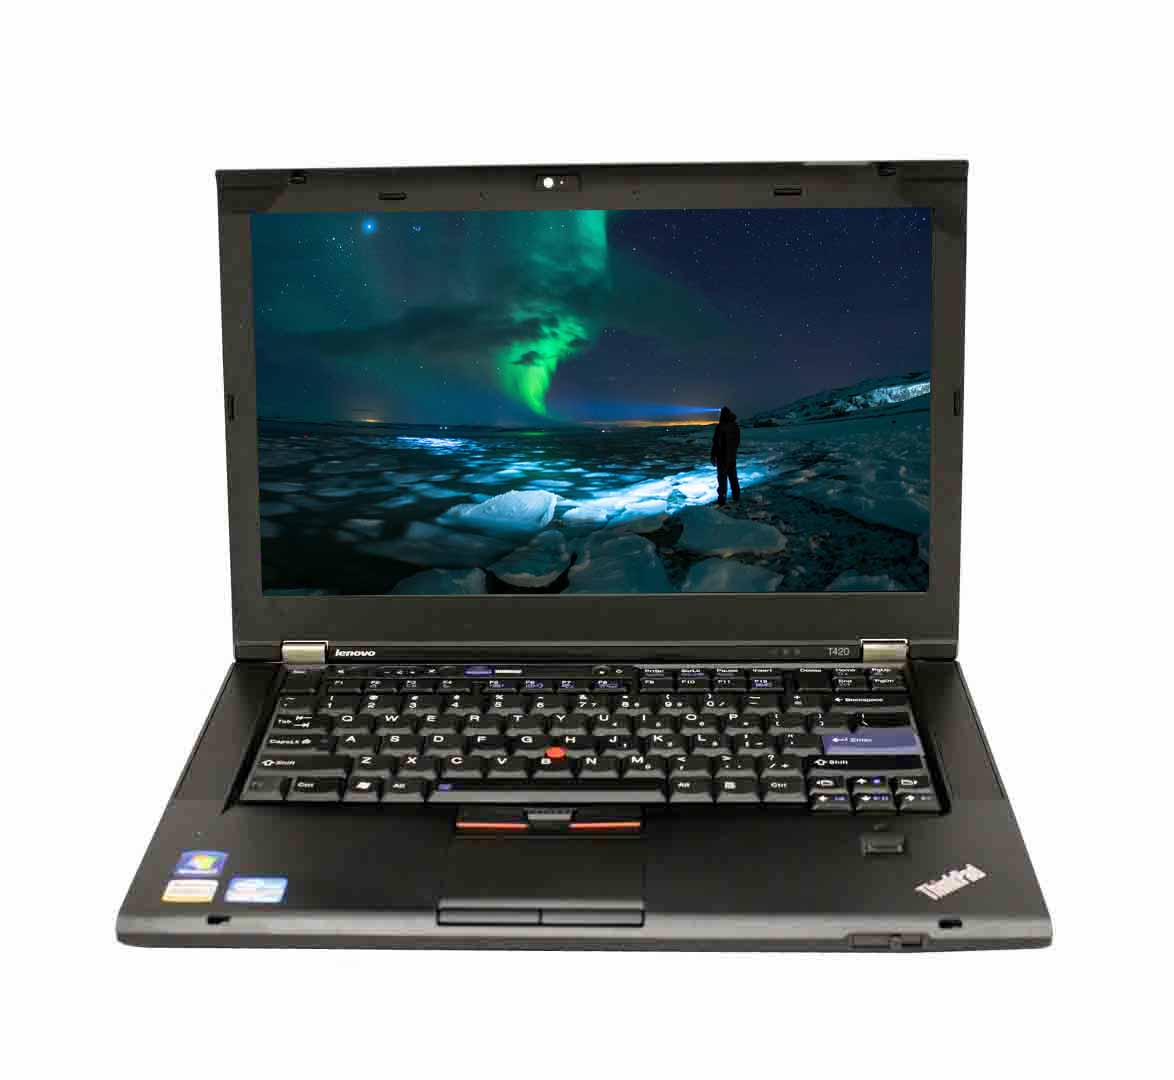 Lenovo ThinkPad T420s Business Laptop, Intel Core i5-2nd Generation CPU, 8GB RAM, 320GB HDD, 14 inch Display, Windows 10 Pro